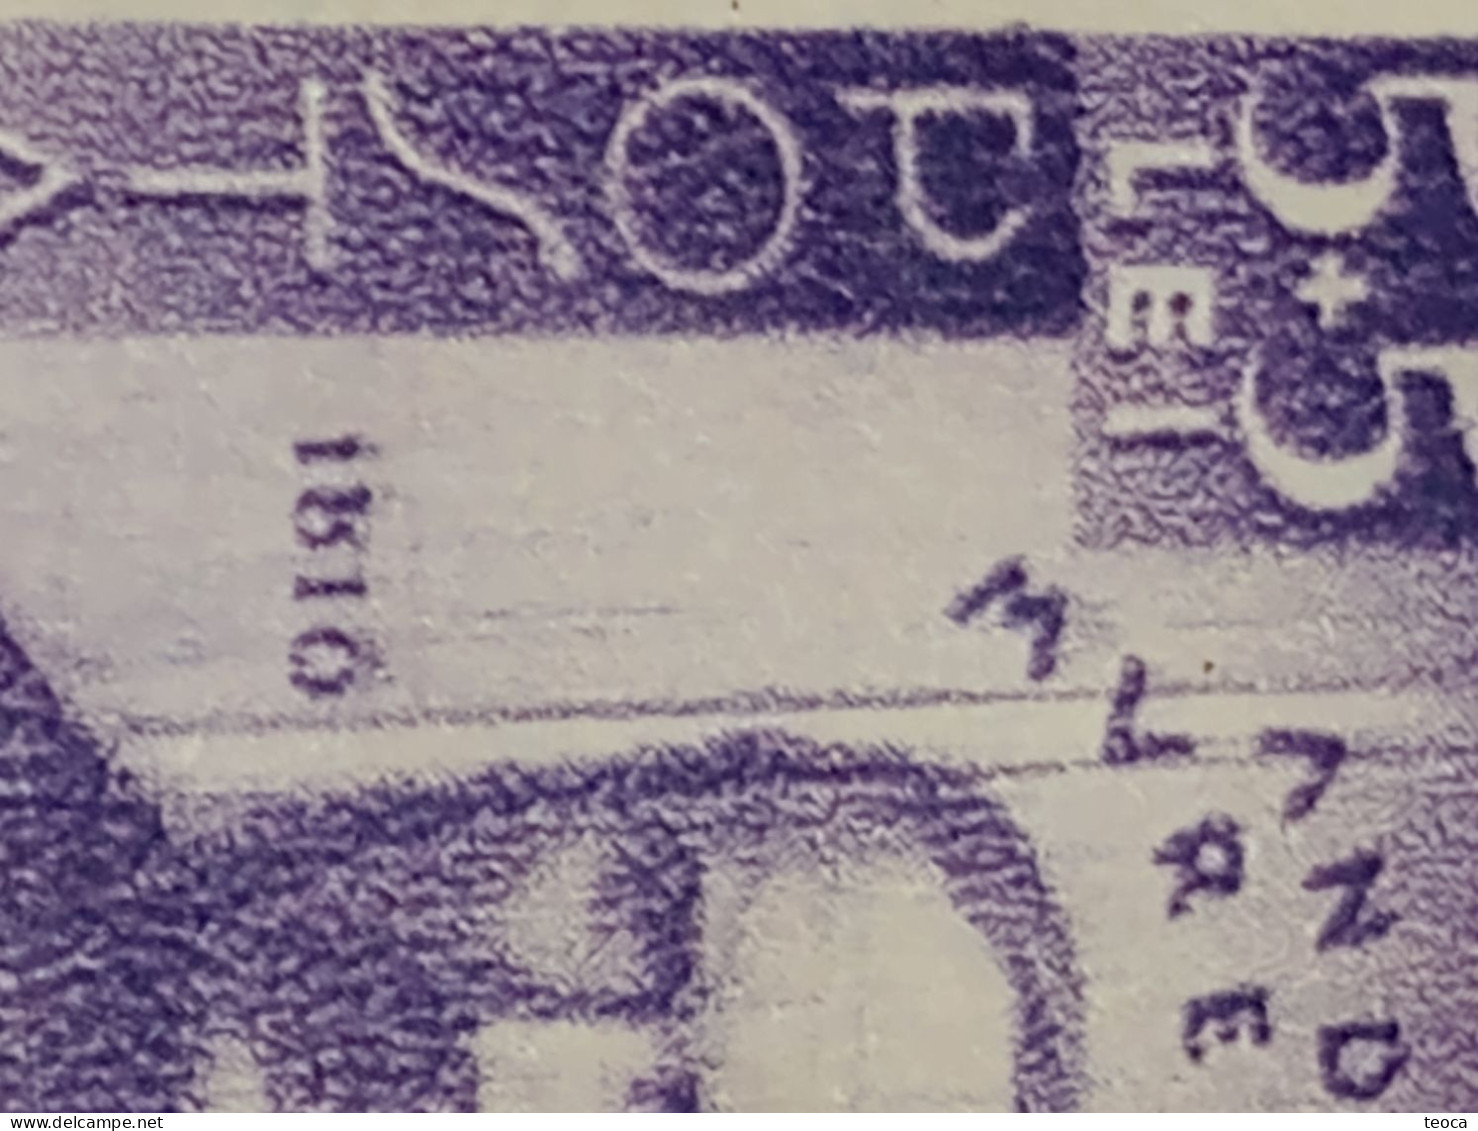 Stamps Errors Romania 1942 # Mi 755 Printed With Double Vertical Lines And Horizontal Line, Letter "p" Broken, See Image - Abarten Und Kuriositäten